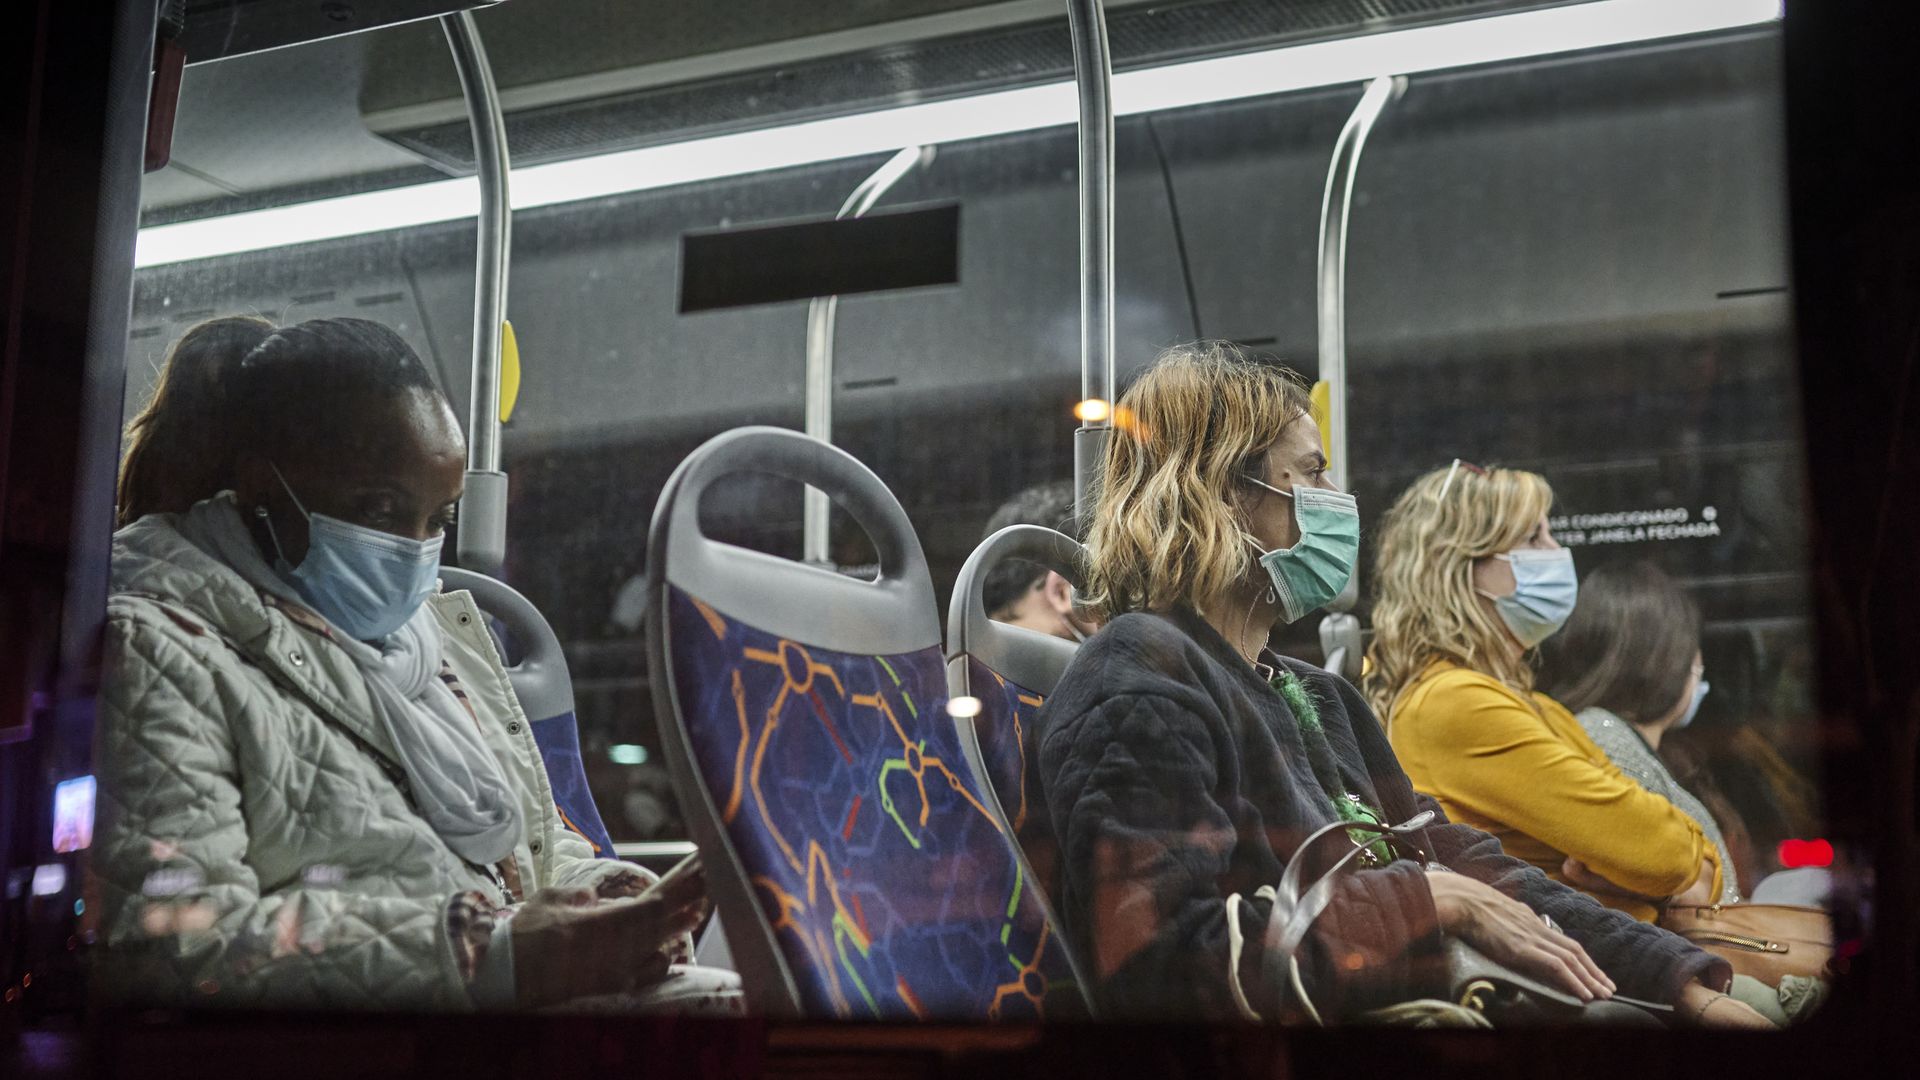 Passengers wear mandatory protective masks while riding on a bus in Avenida da Liberdade during the COVID-19 Coronavirus pandemic on November 19, 2020 in Lisbon, Portugal. 